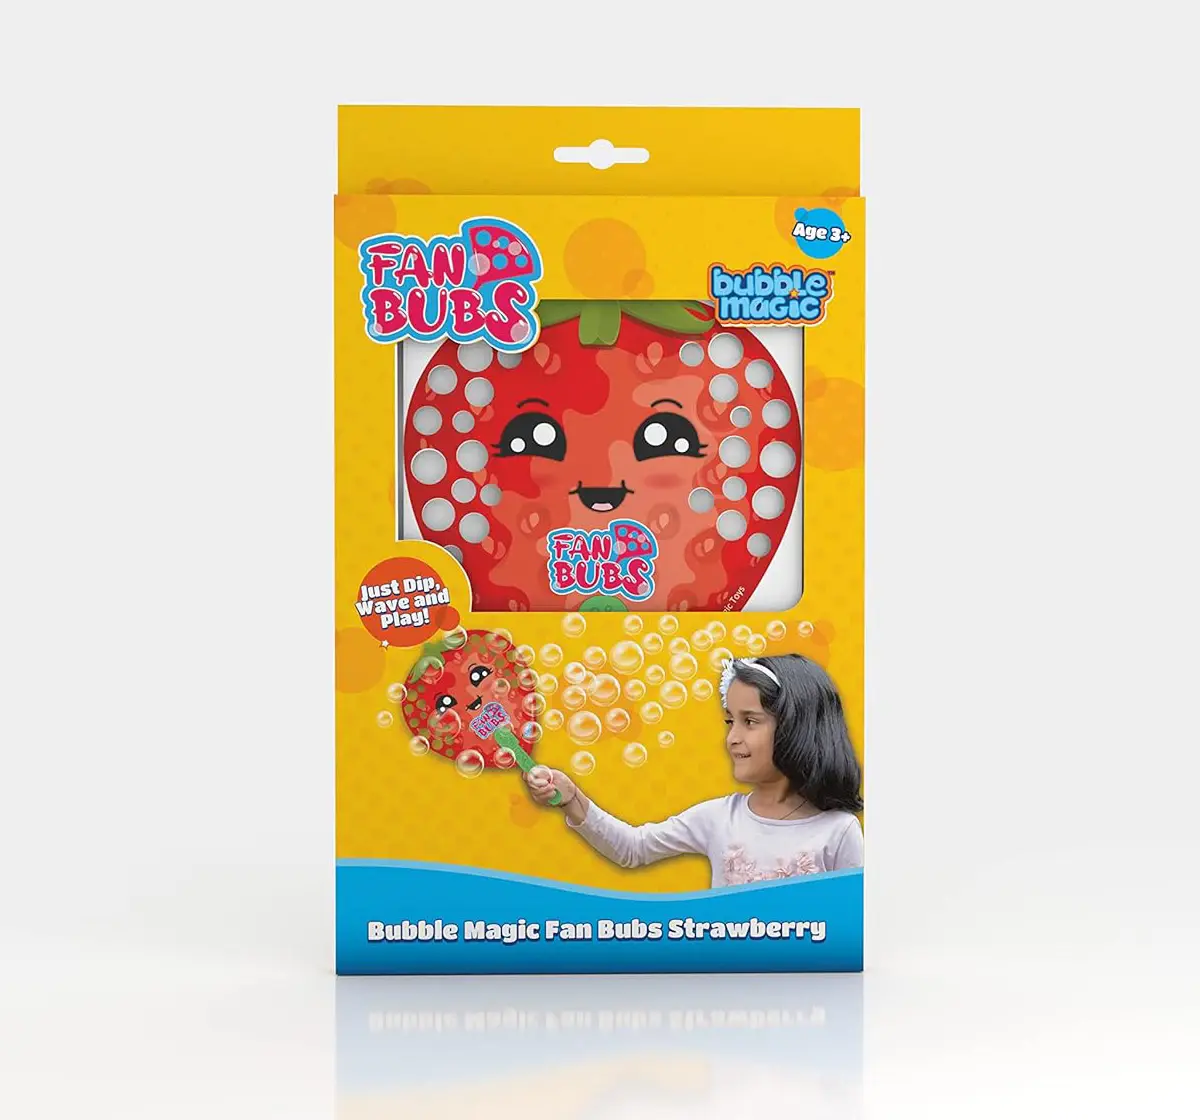 Bubble Magic Fan Bubs Strawberry Bubble Solution For Kids of Age 3Y+, Multicolour